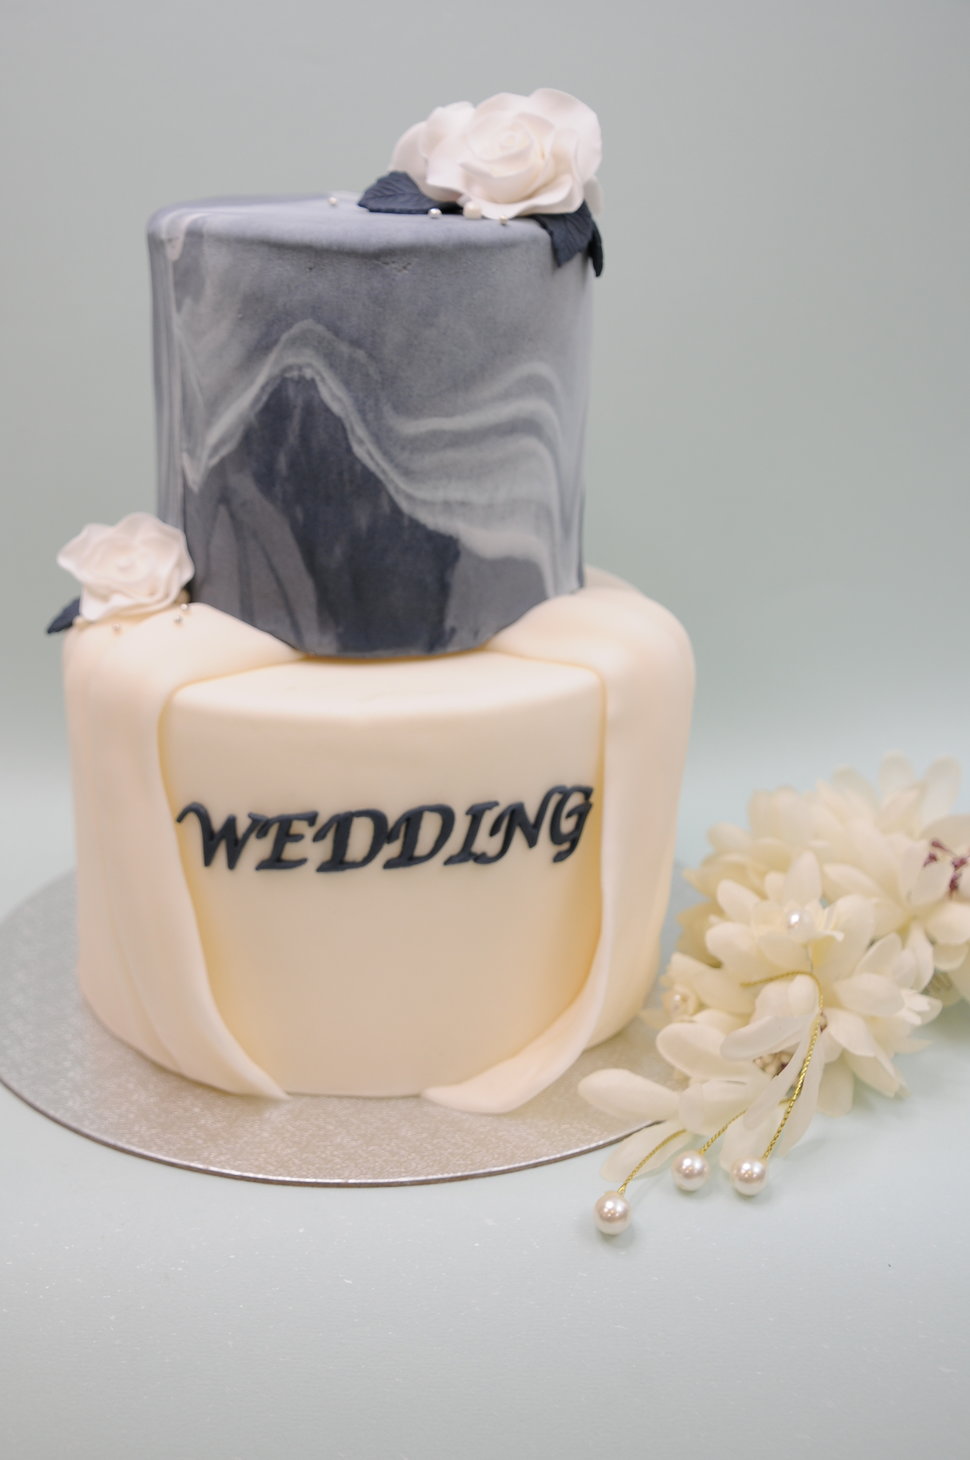 DSC_6478 - WC婚禮蛋糕《結婚吧》